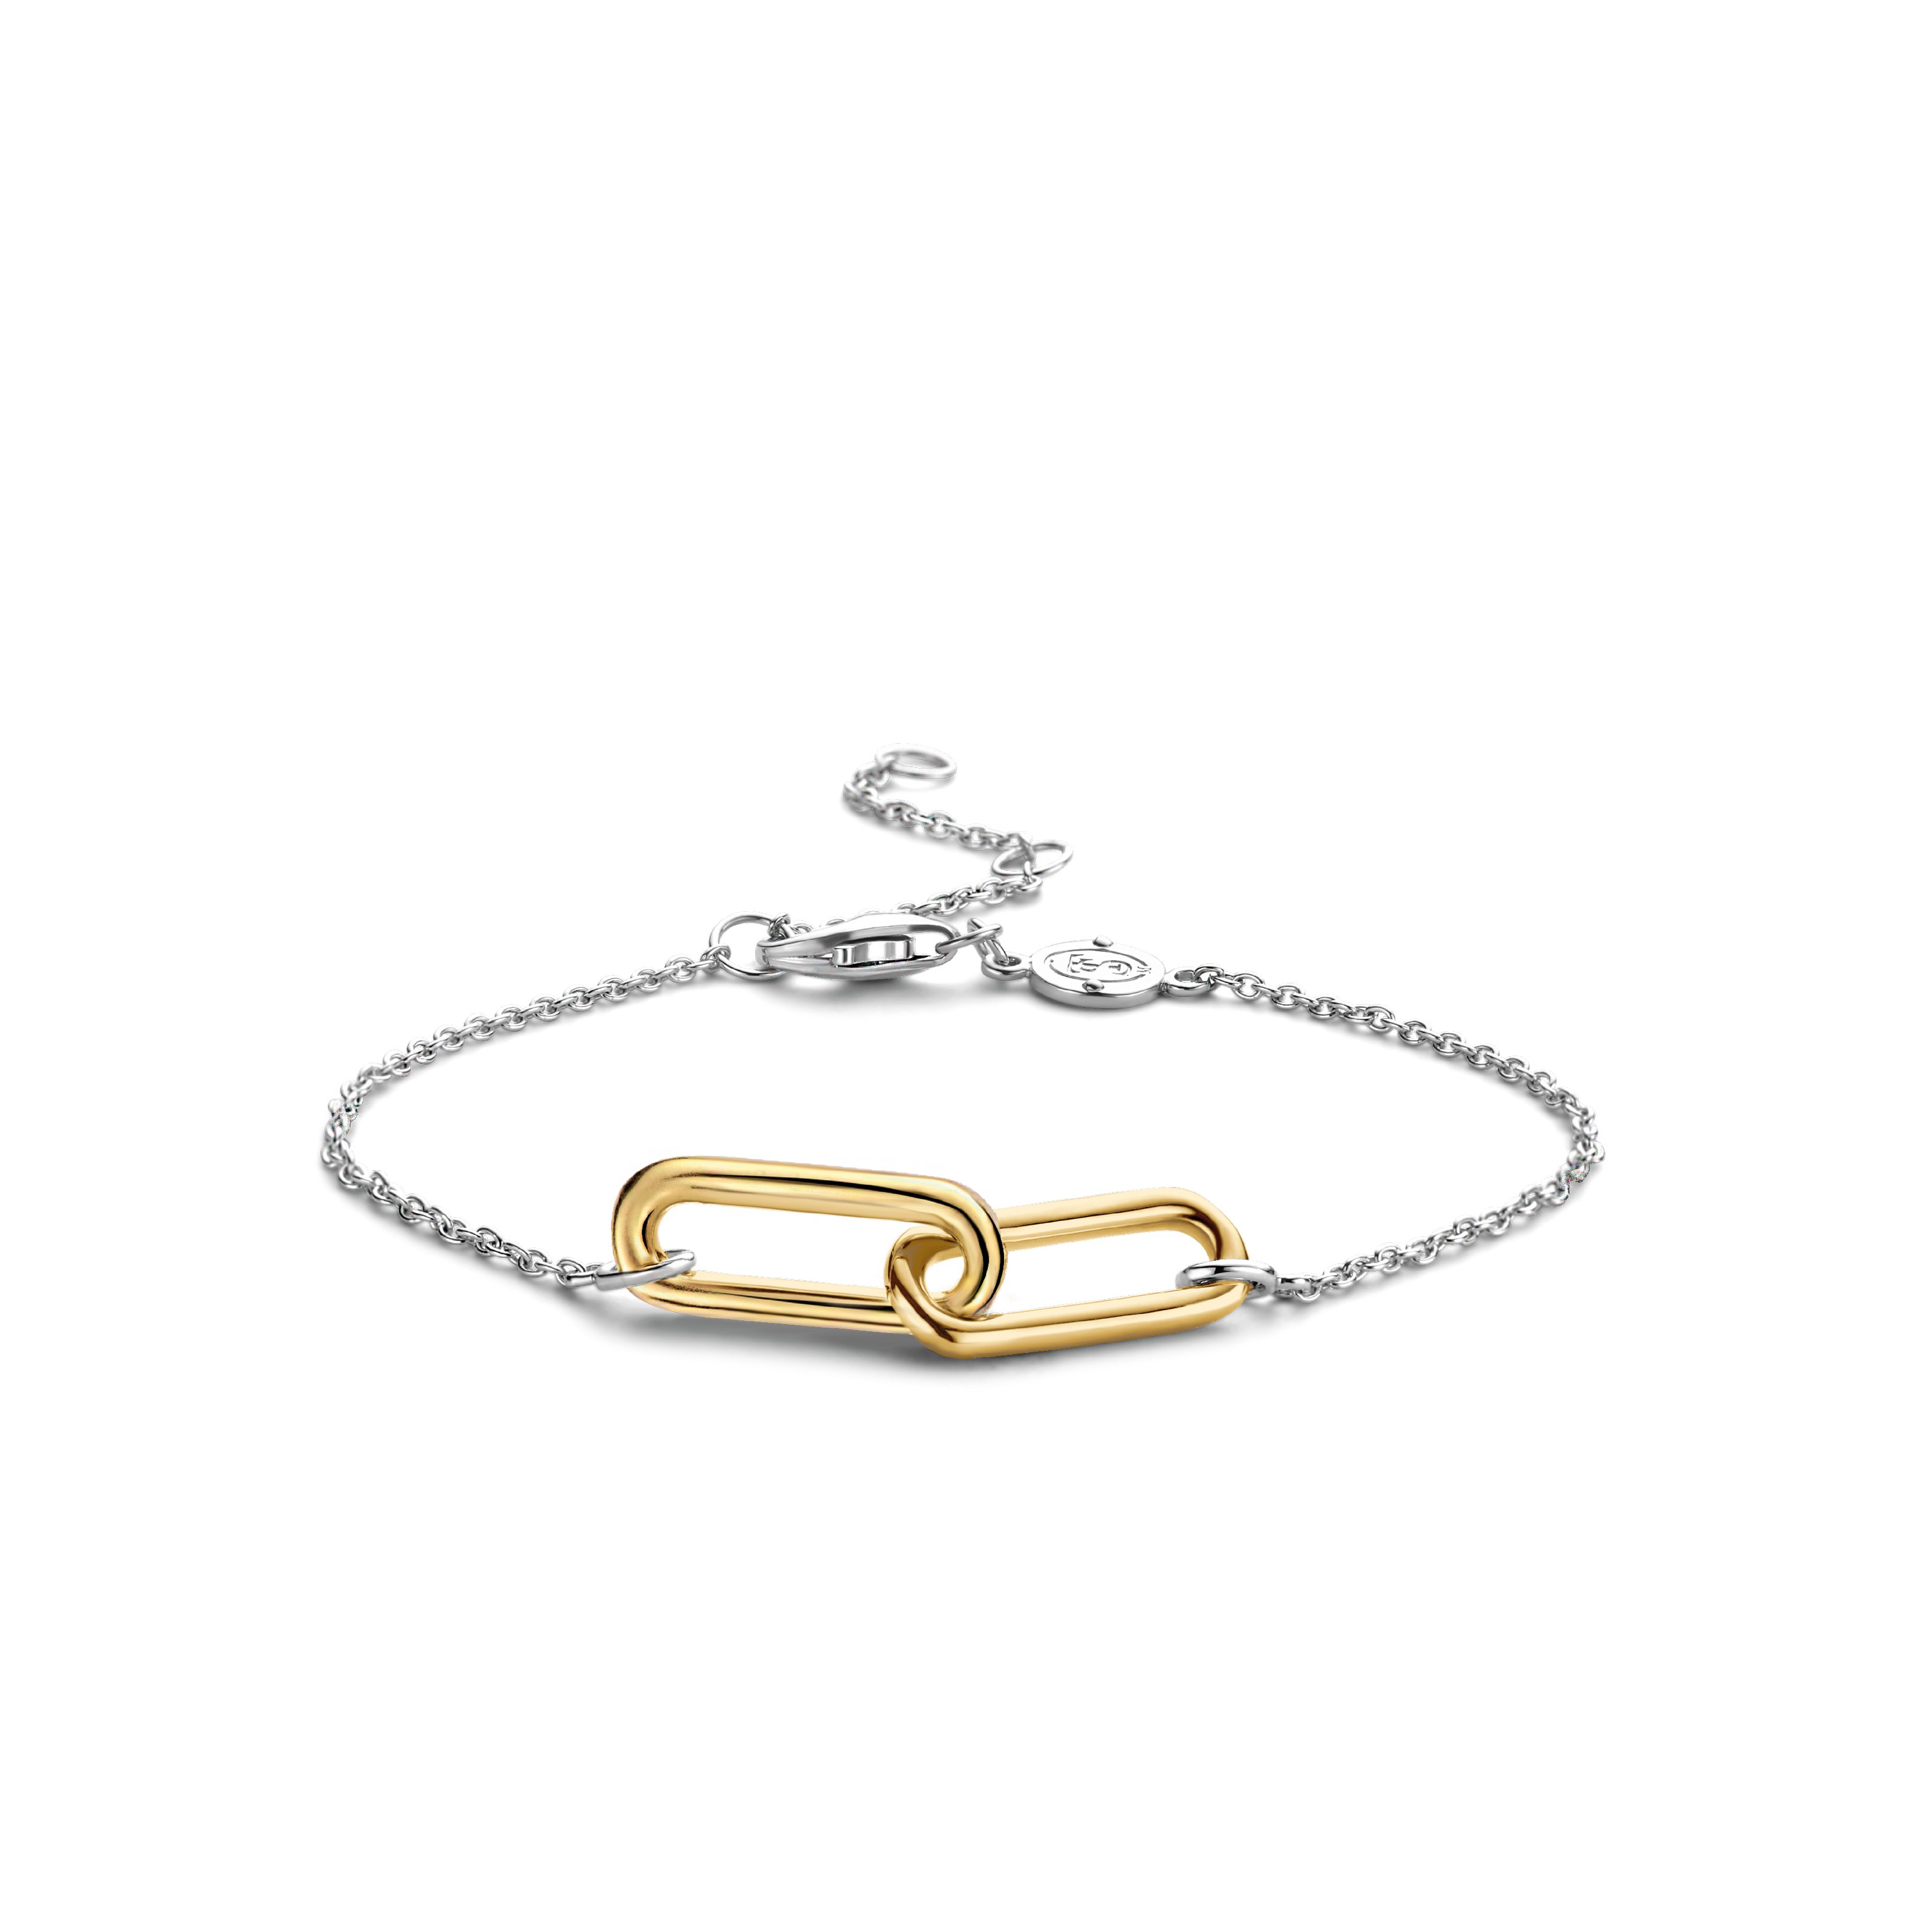 TI SENTO - Milano Bracelet 2960SY Gala Jewelers Inc. White Oak, PA